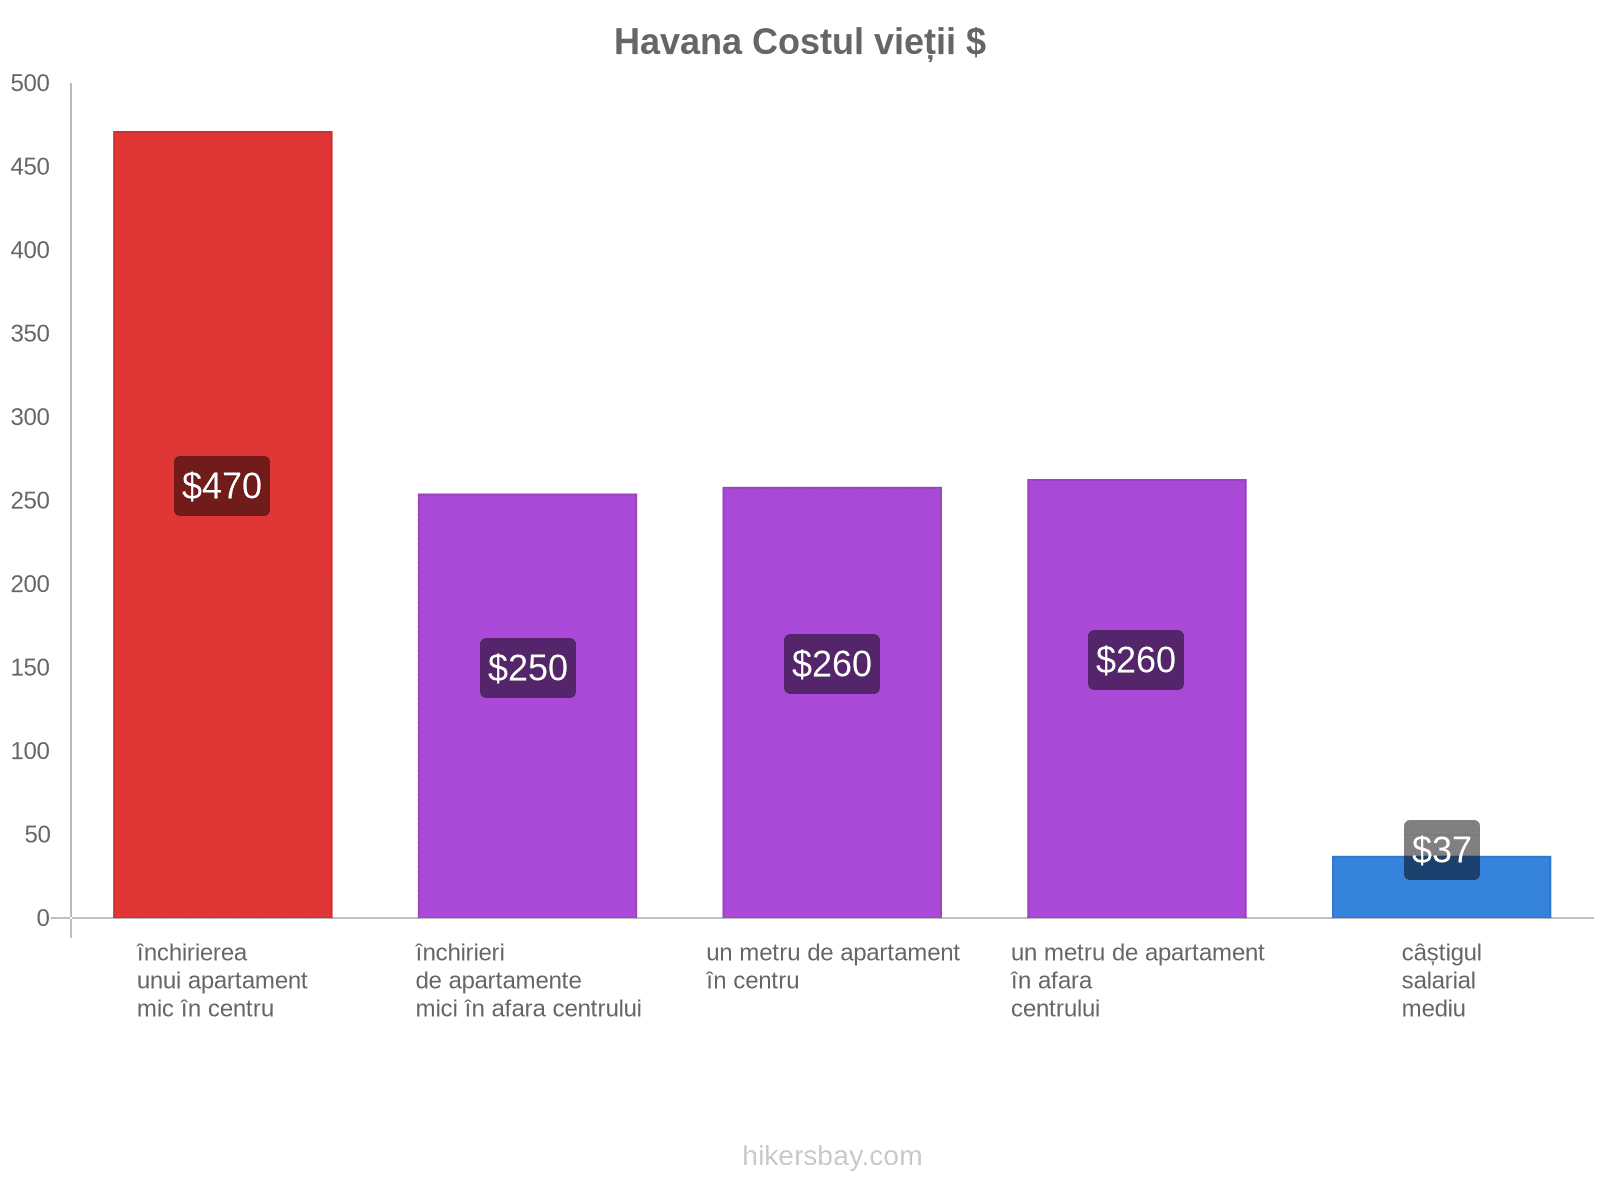 Havana costul vieții hikersbay.com